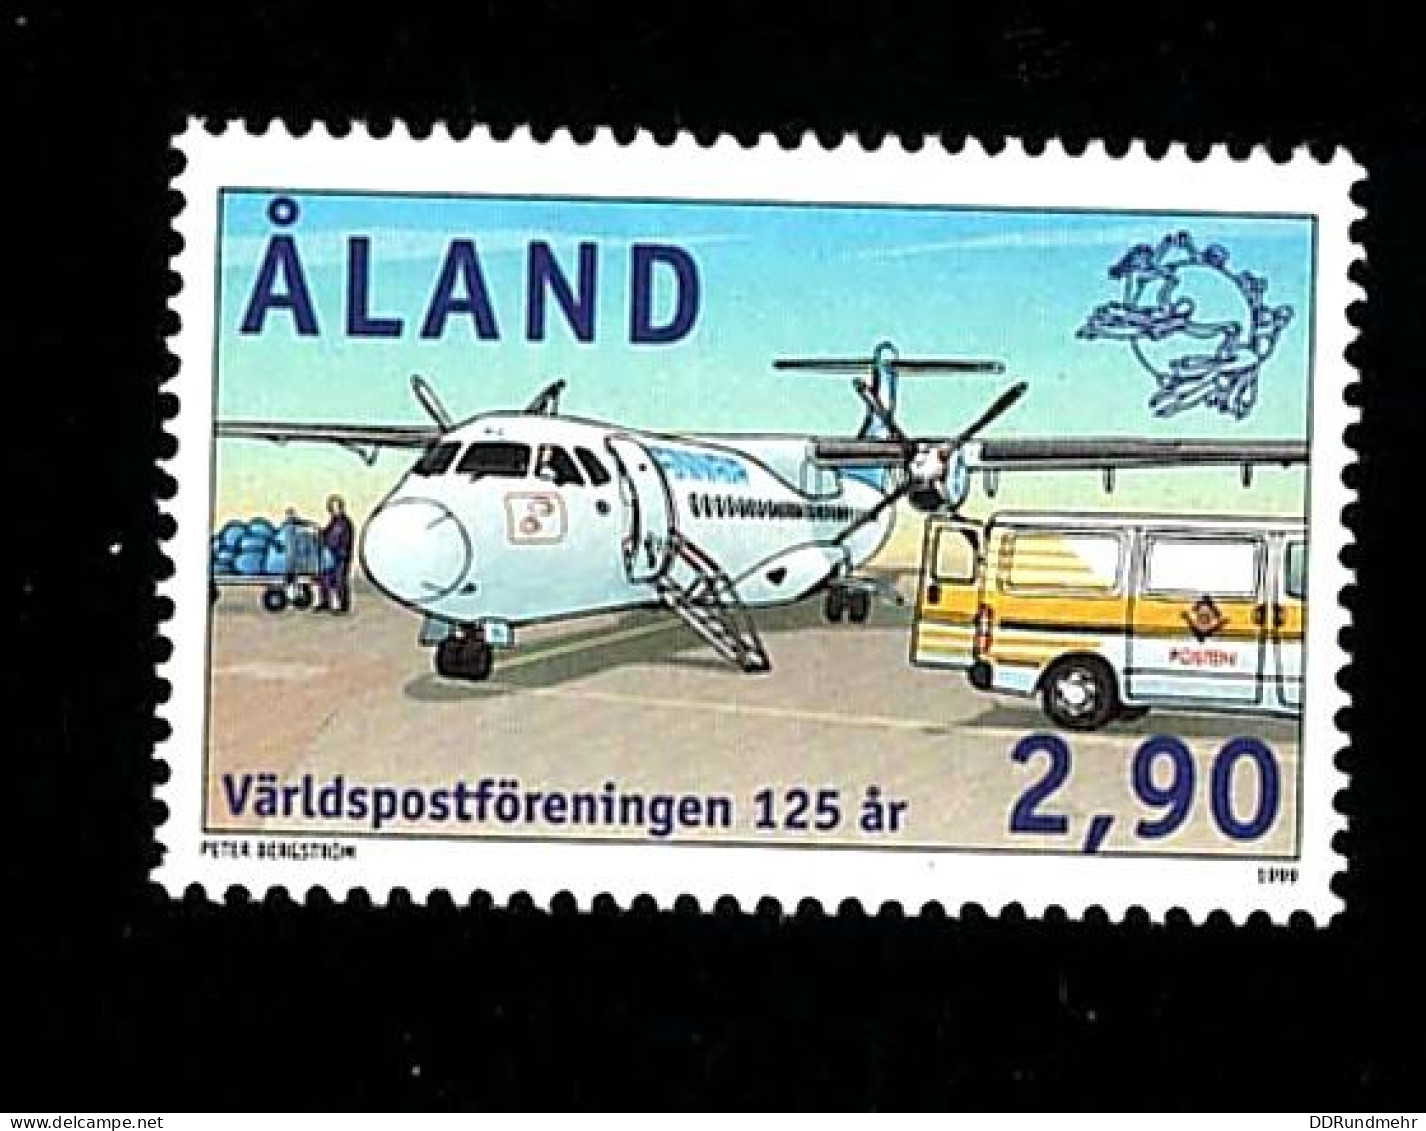 1999 UPU  Michel AX 161 Stamp Number AX 159 Yvert Et Tellier AX 159 Stanley Gibbons AX 157 AFA AX 159 Xx MNH - Aland